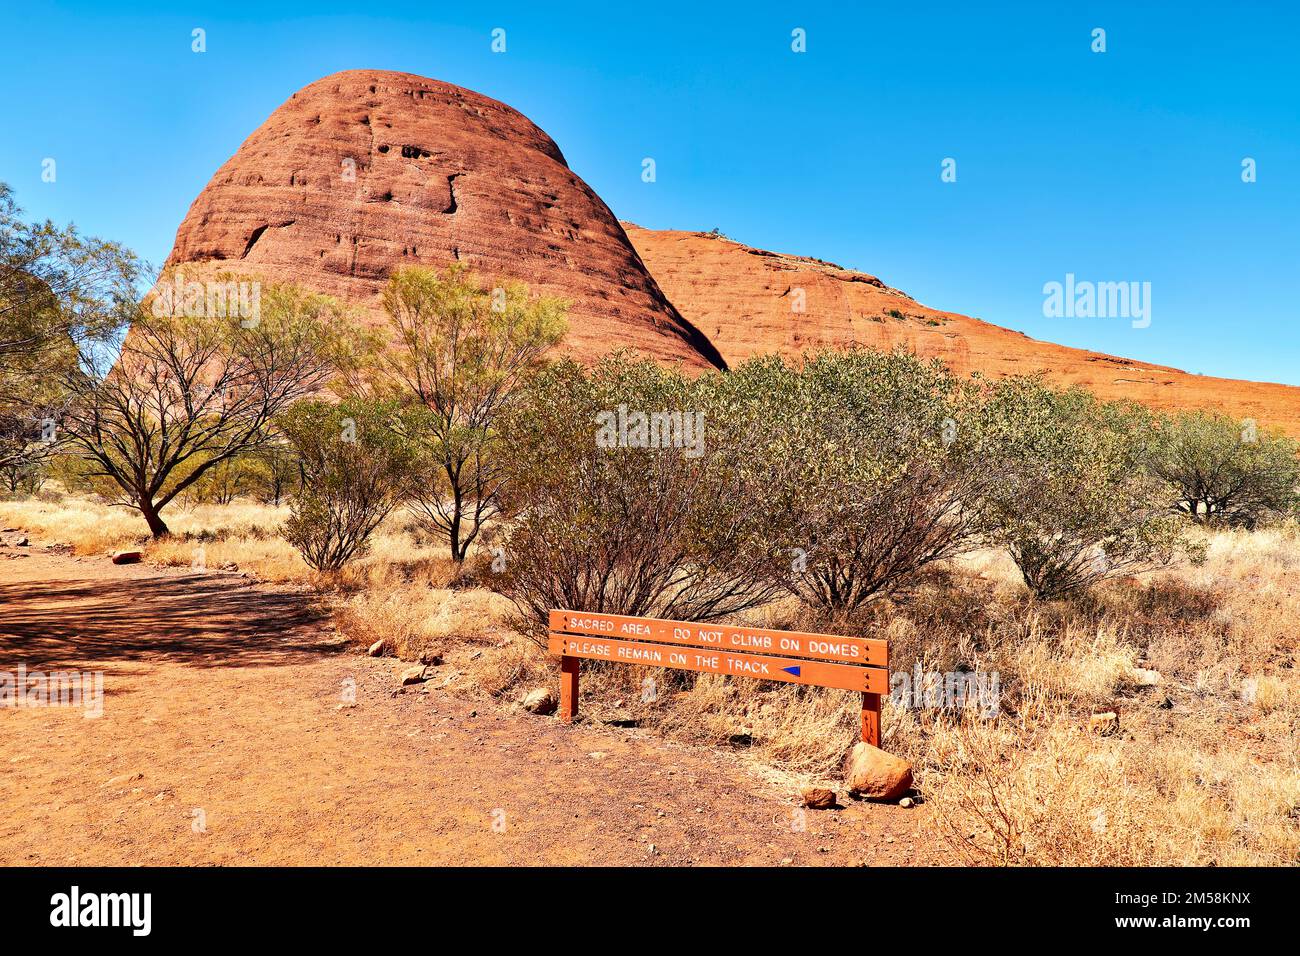 Kata Tjuta. Die Olgas. Nördliches Territorium. Australien Stockfoto